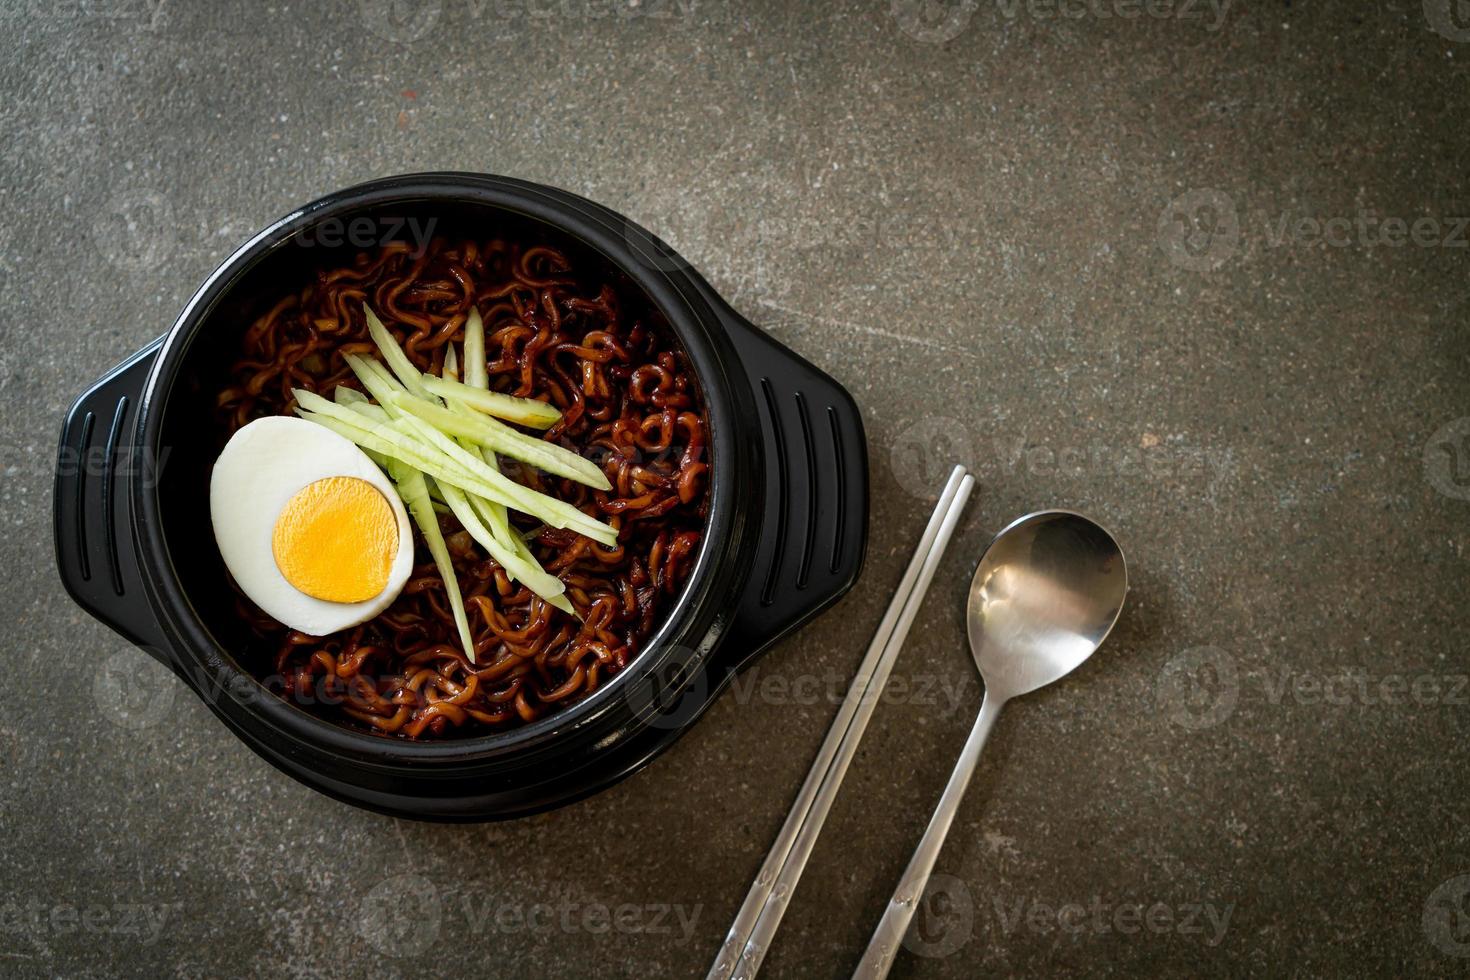 noodle istantanei coreani con salsa di fagioli neri o jajangmyeon o jjajangmyeon foto